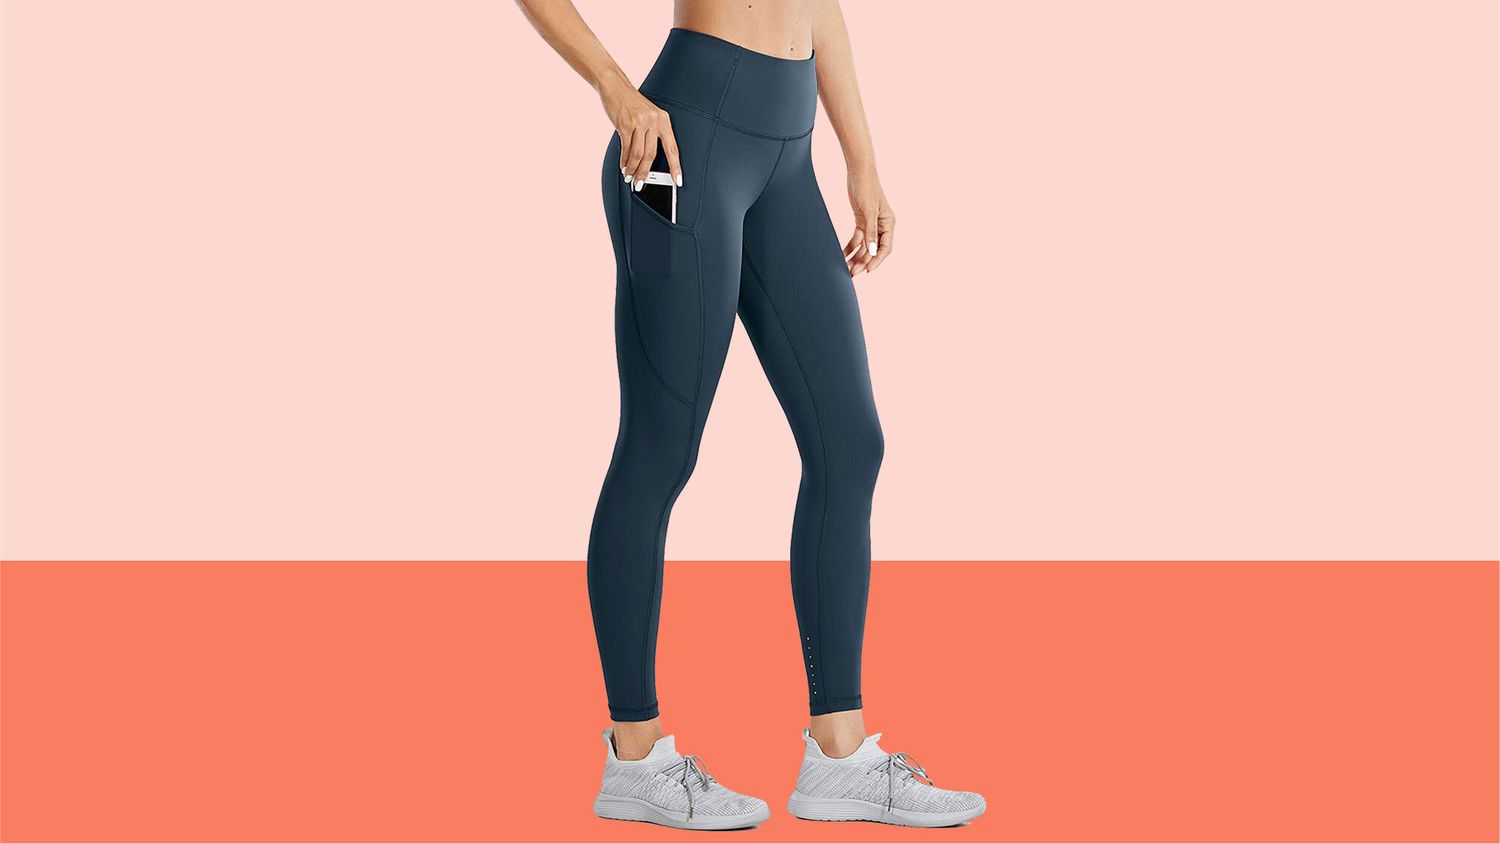 Dutte Lisa High Waist Yoga Pants with Pockets for Womens Leggings Full-Length Yoga Pants 